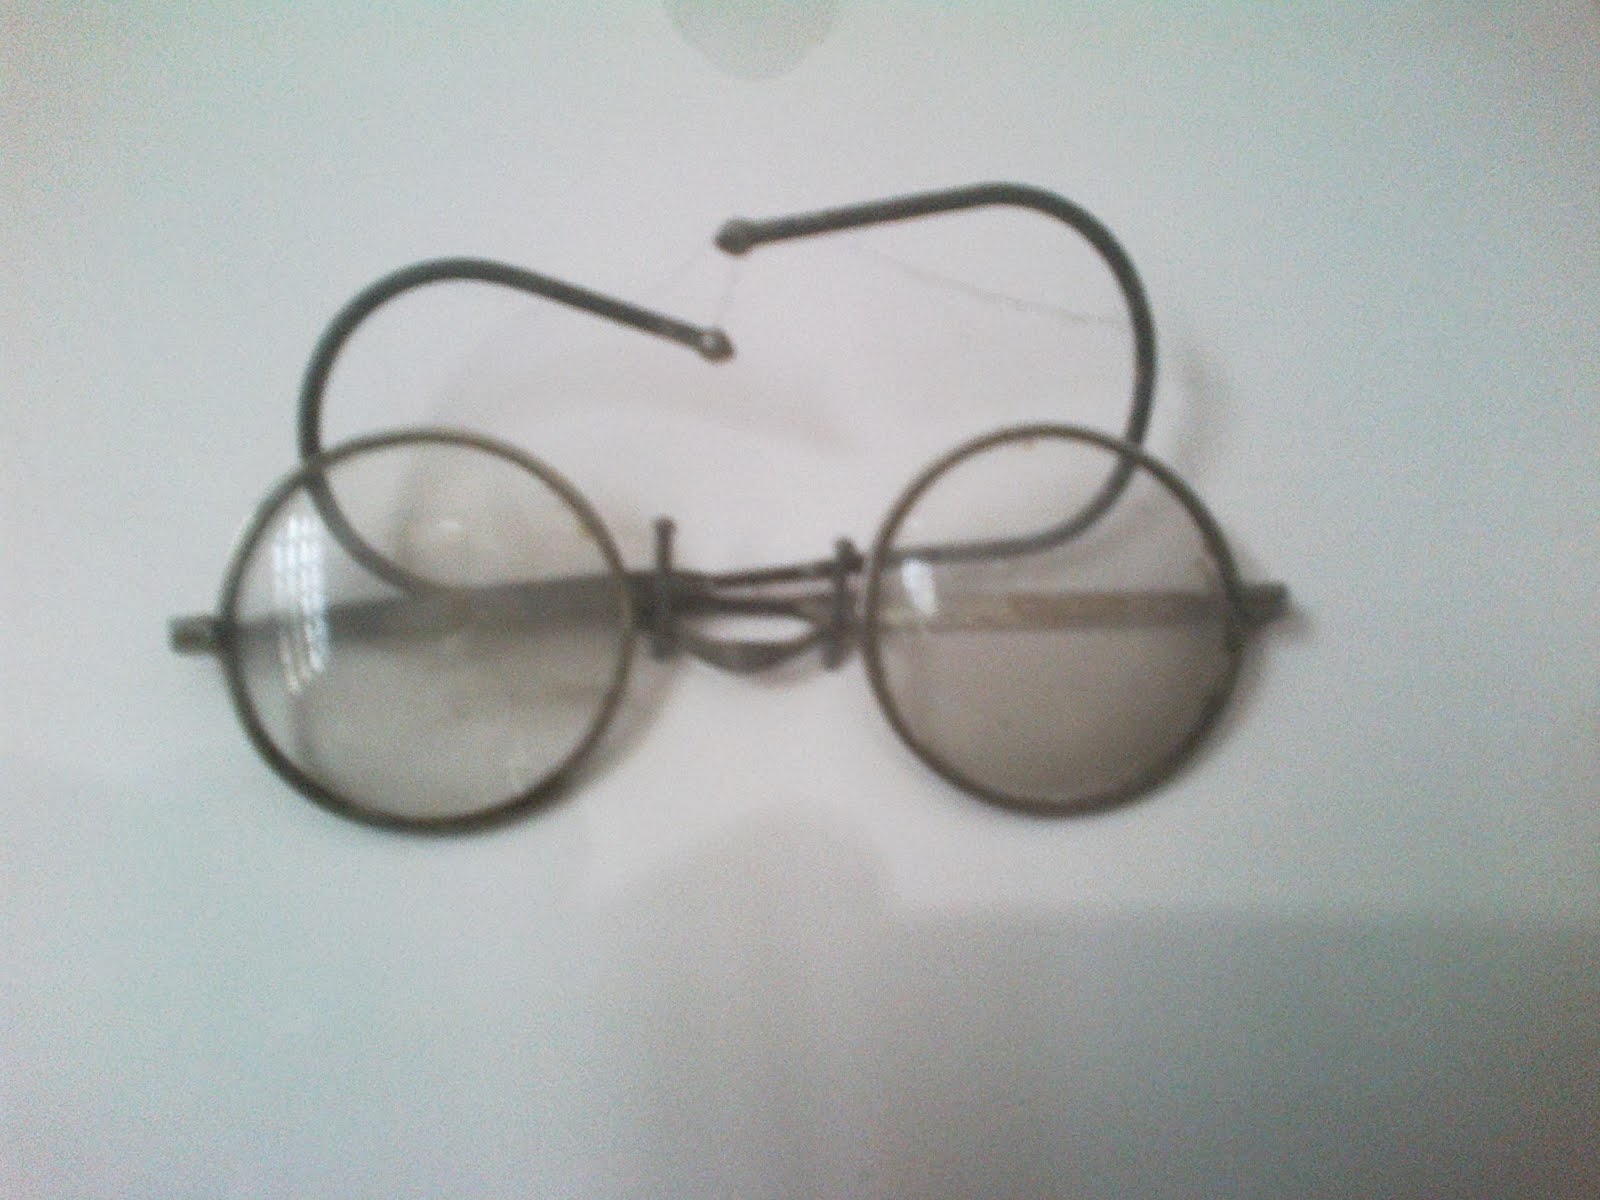 Specs of M.Gandhi